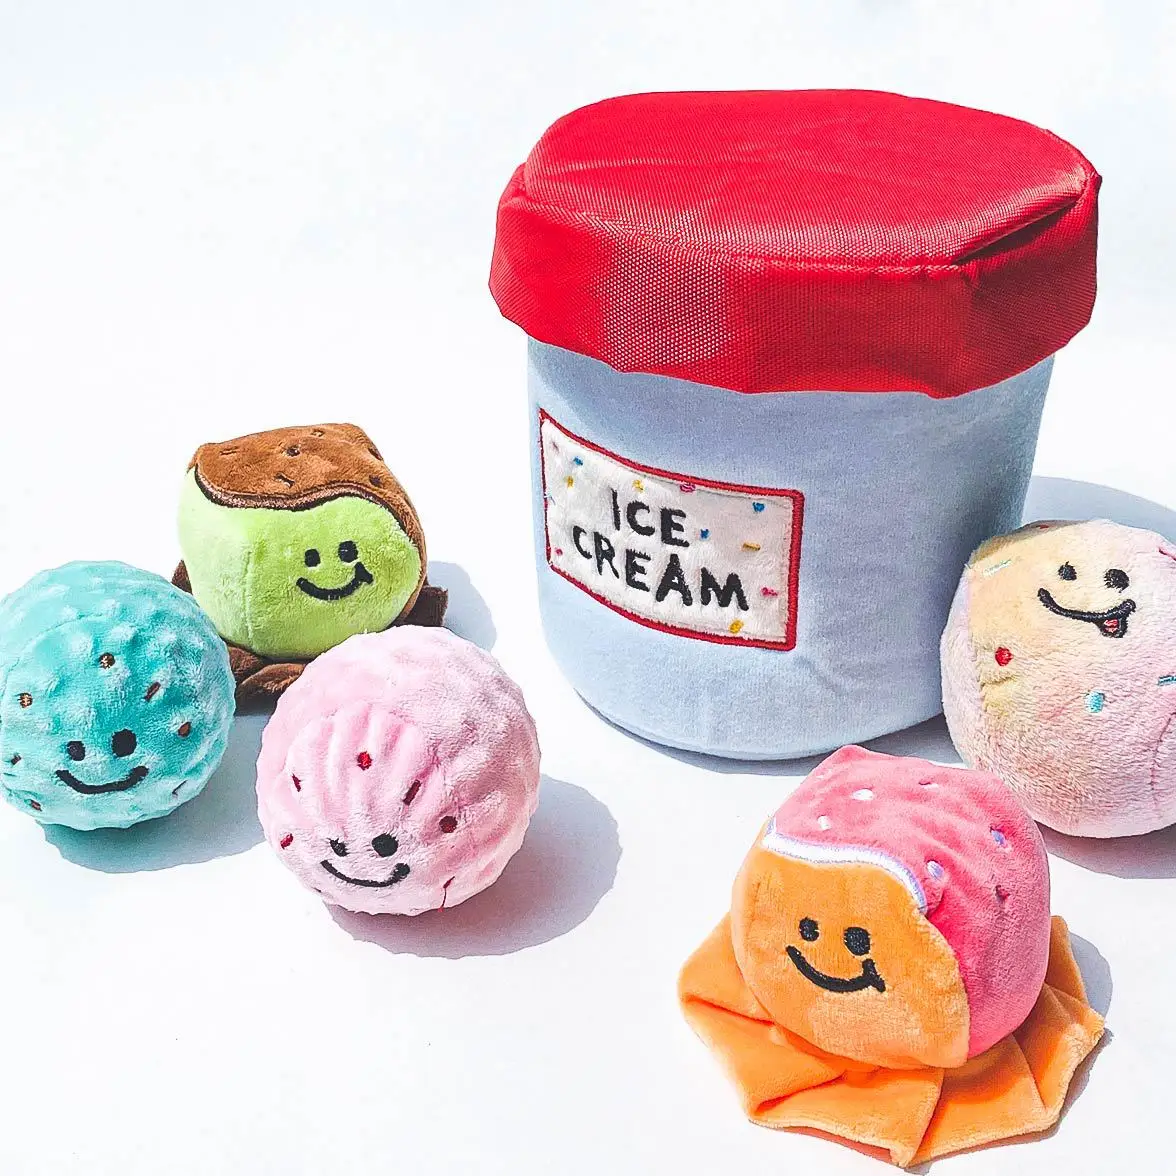 

New Design Ins Korea Ice Cream Bucket Luminous Ball Interactive Plush Dog Chew Squeaky Toy Sounding Pet Toy, Picture shows